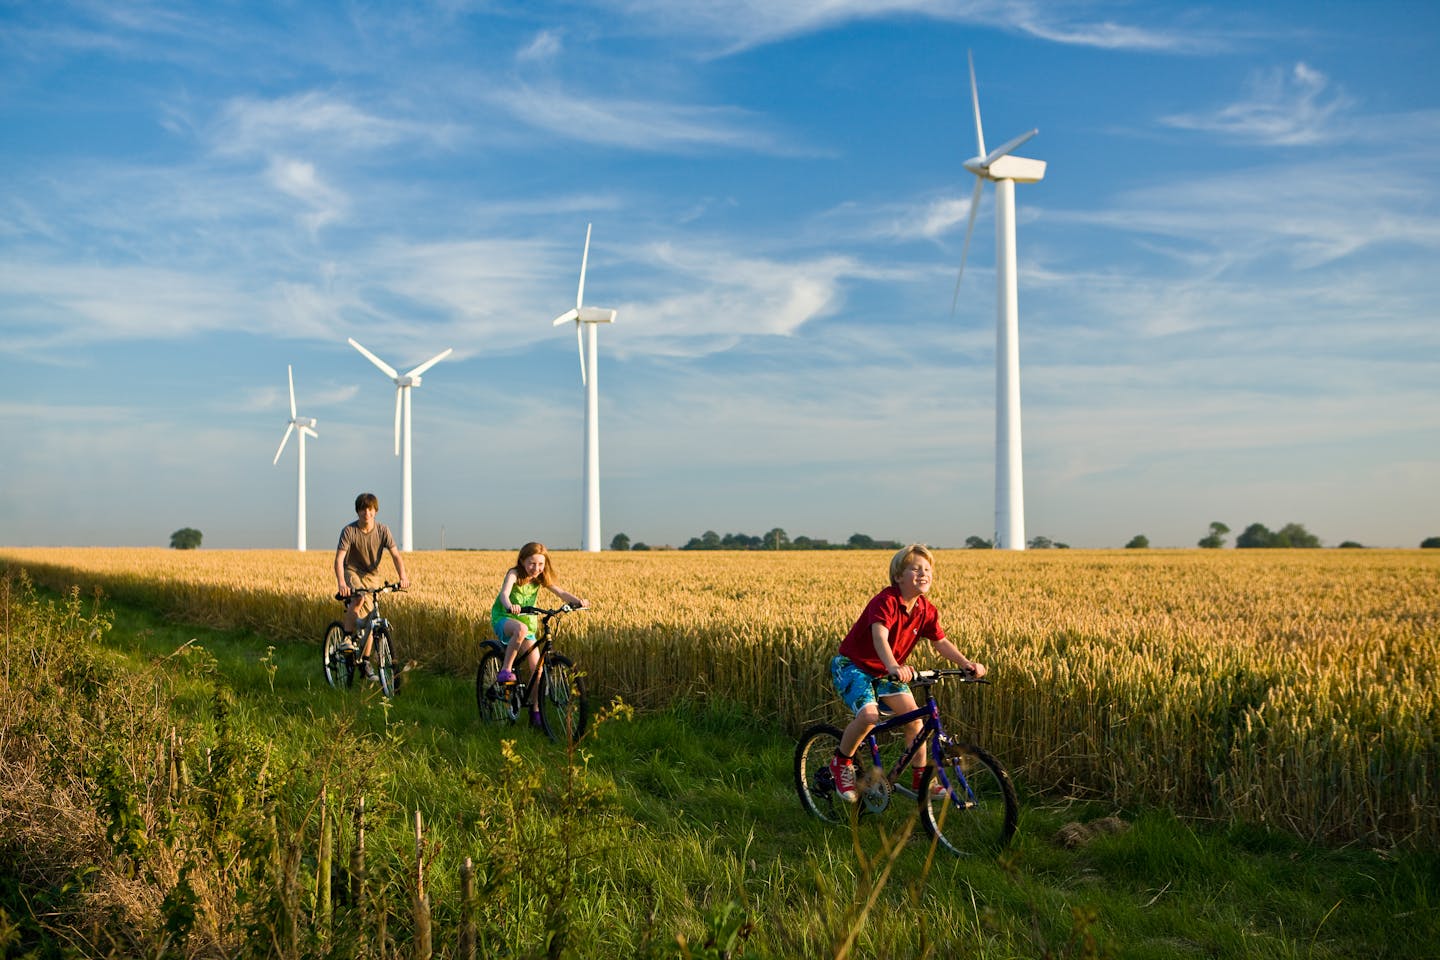 Three kids on bikes ride past a row of wind turbines in a wheat field.